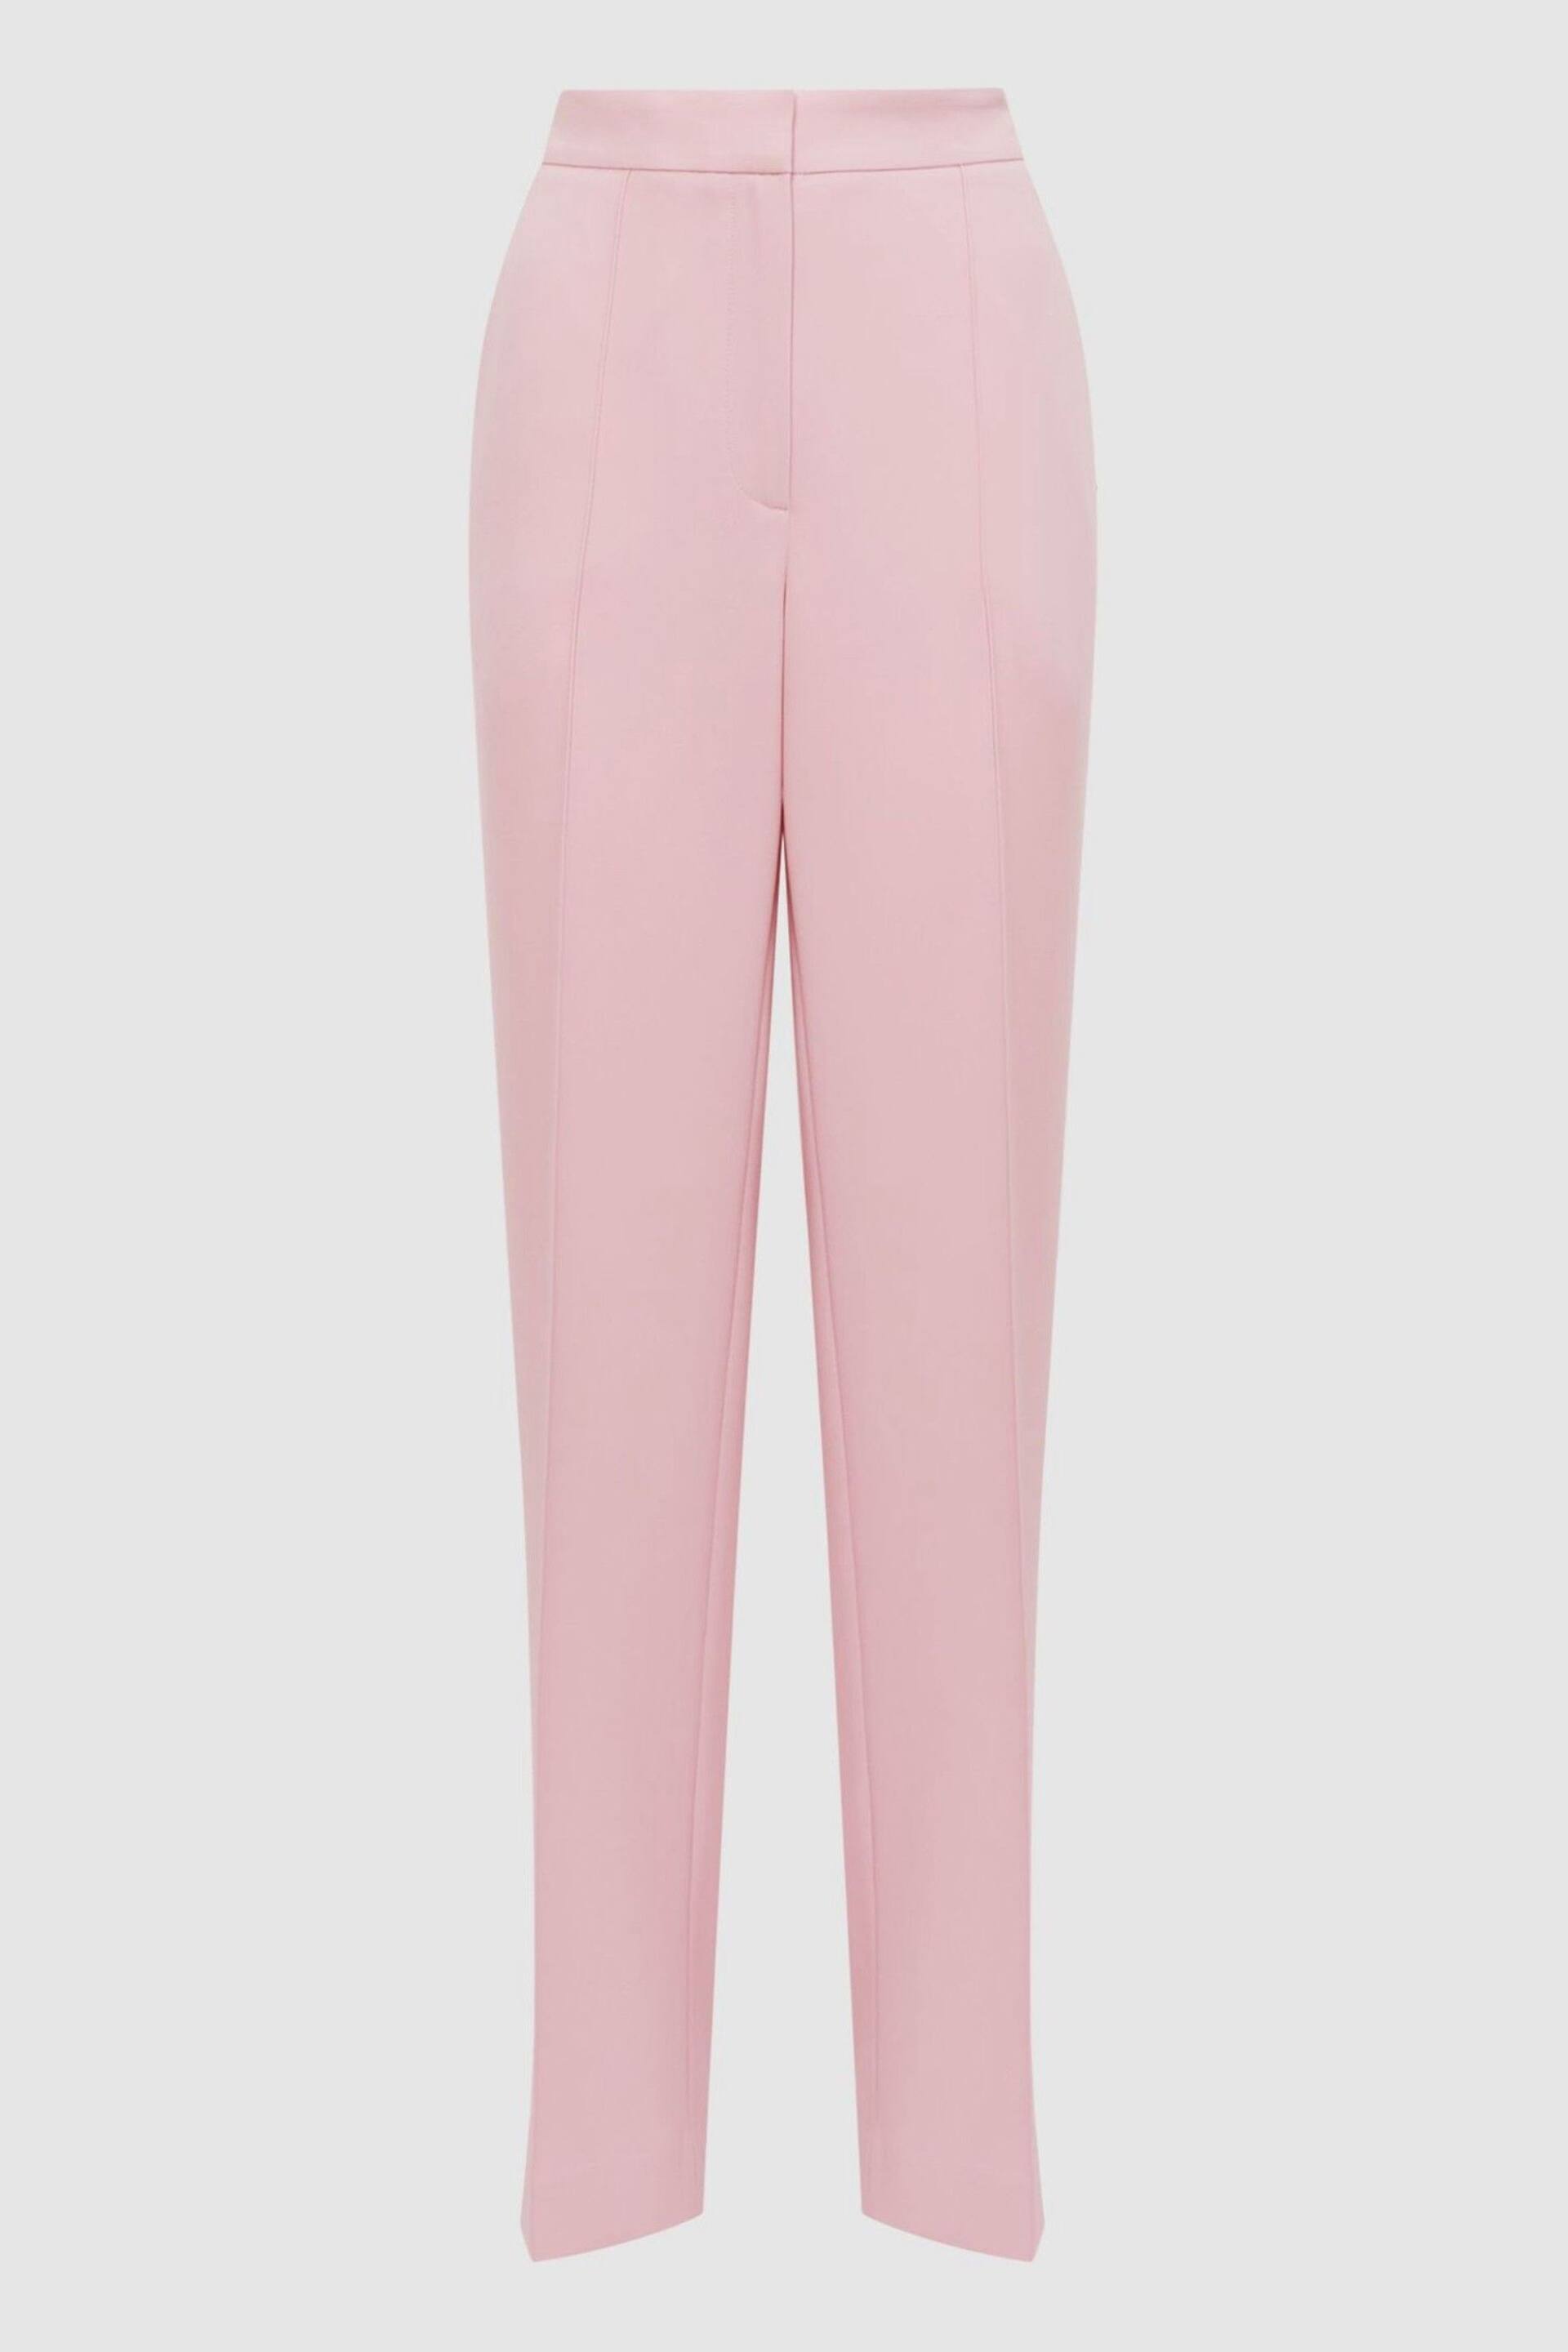 Reiss Pink Marina Petite Wide Leg Split Hem Trousers - Image 2 of 6